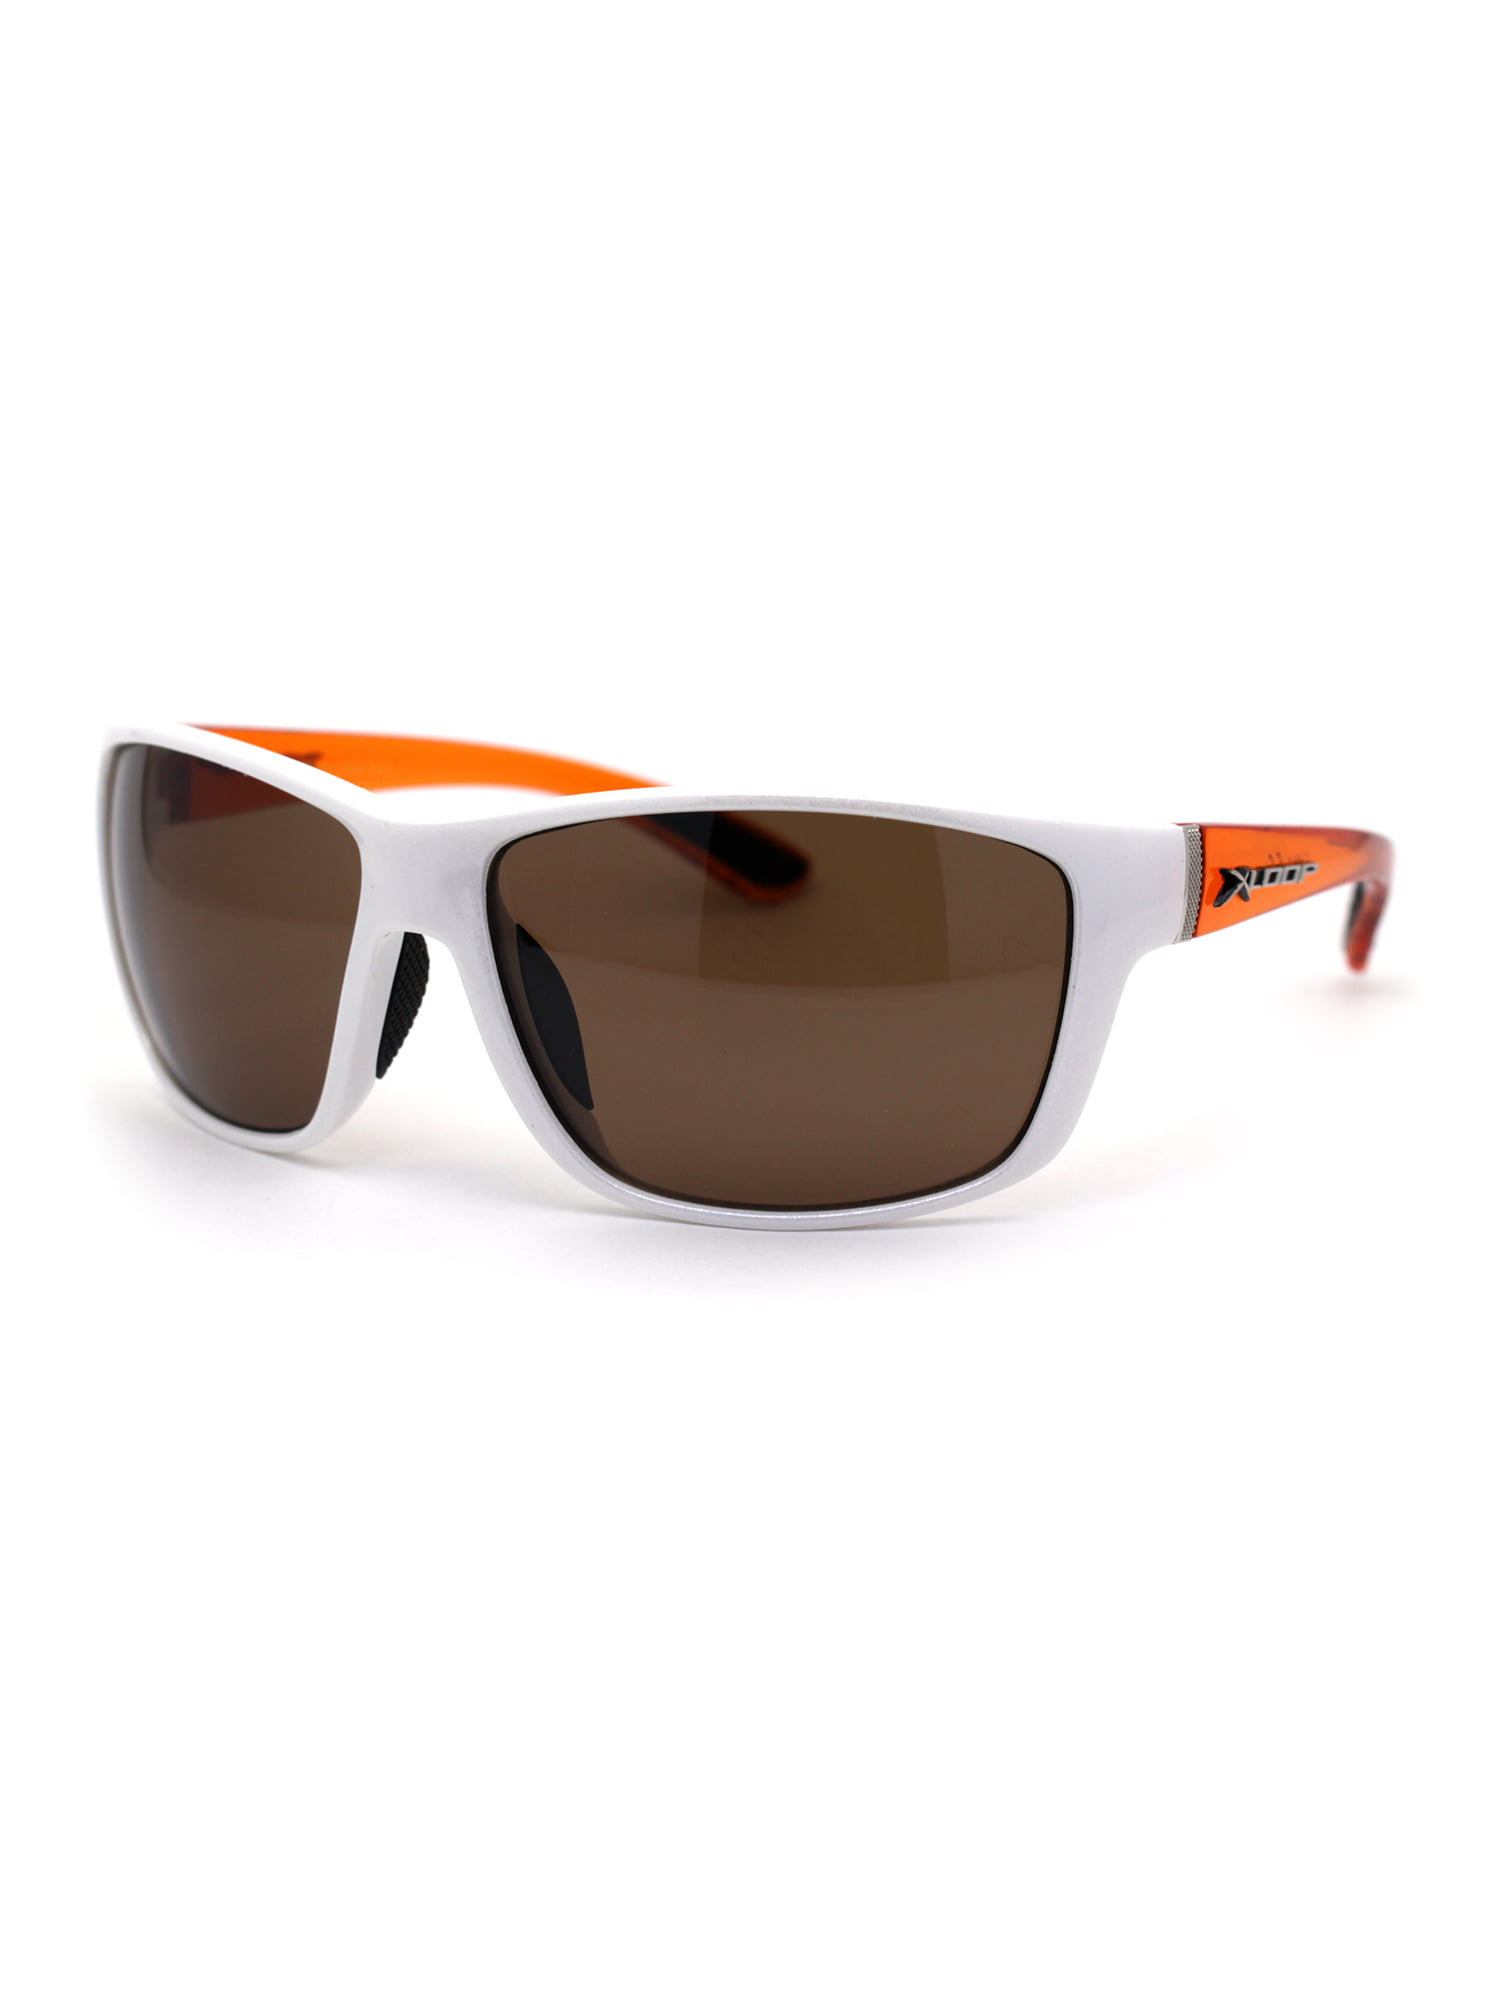 Xloop Mens Womens Designer Sports Wrap UV400 Light Orange Sunglasses New 